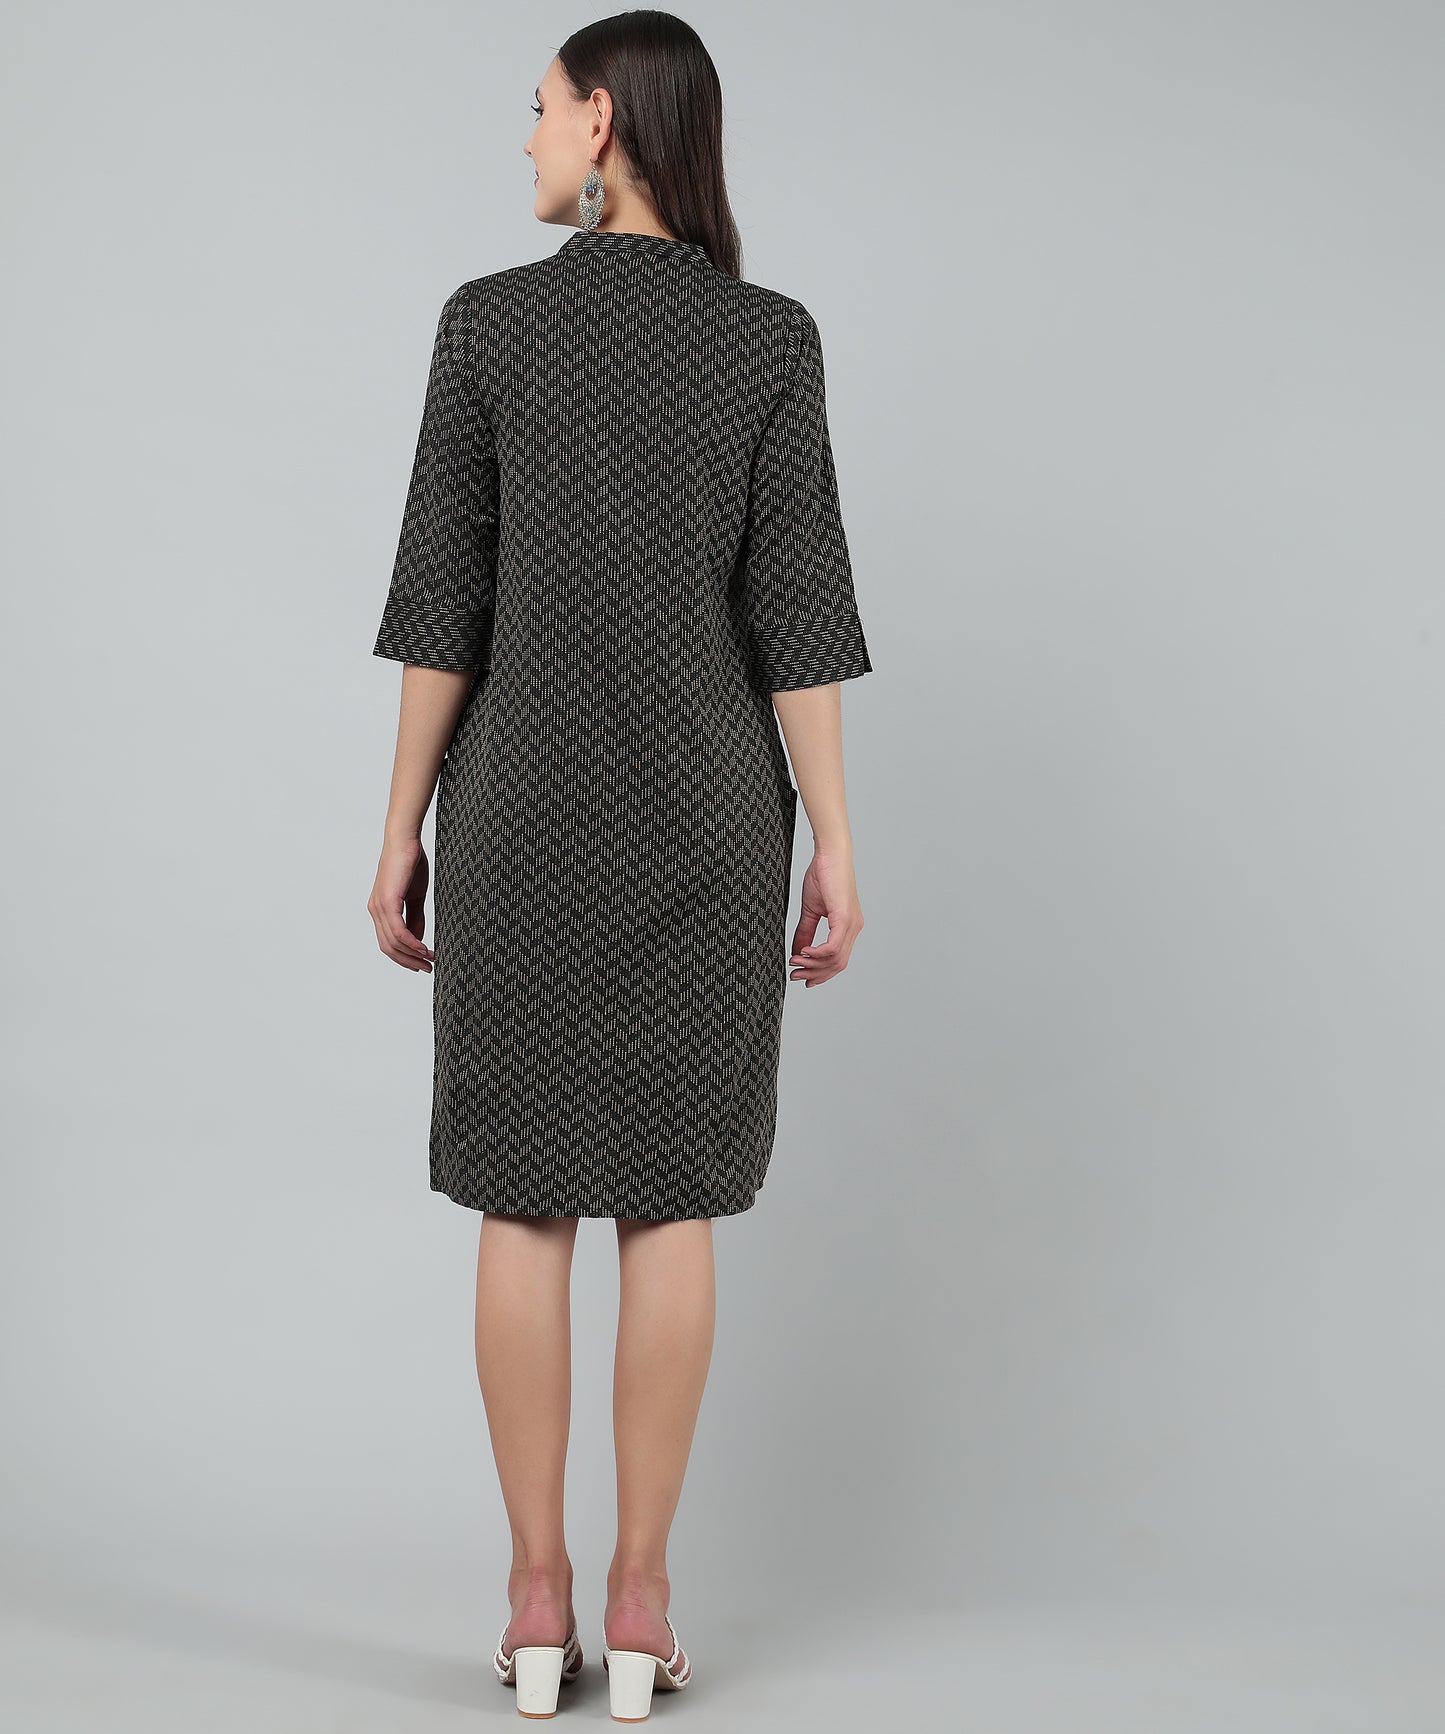 Self Weaved A-line Dress for Women Open Button Design,Black